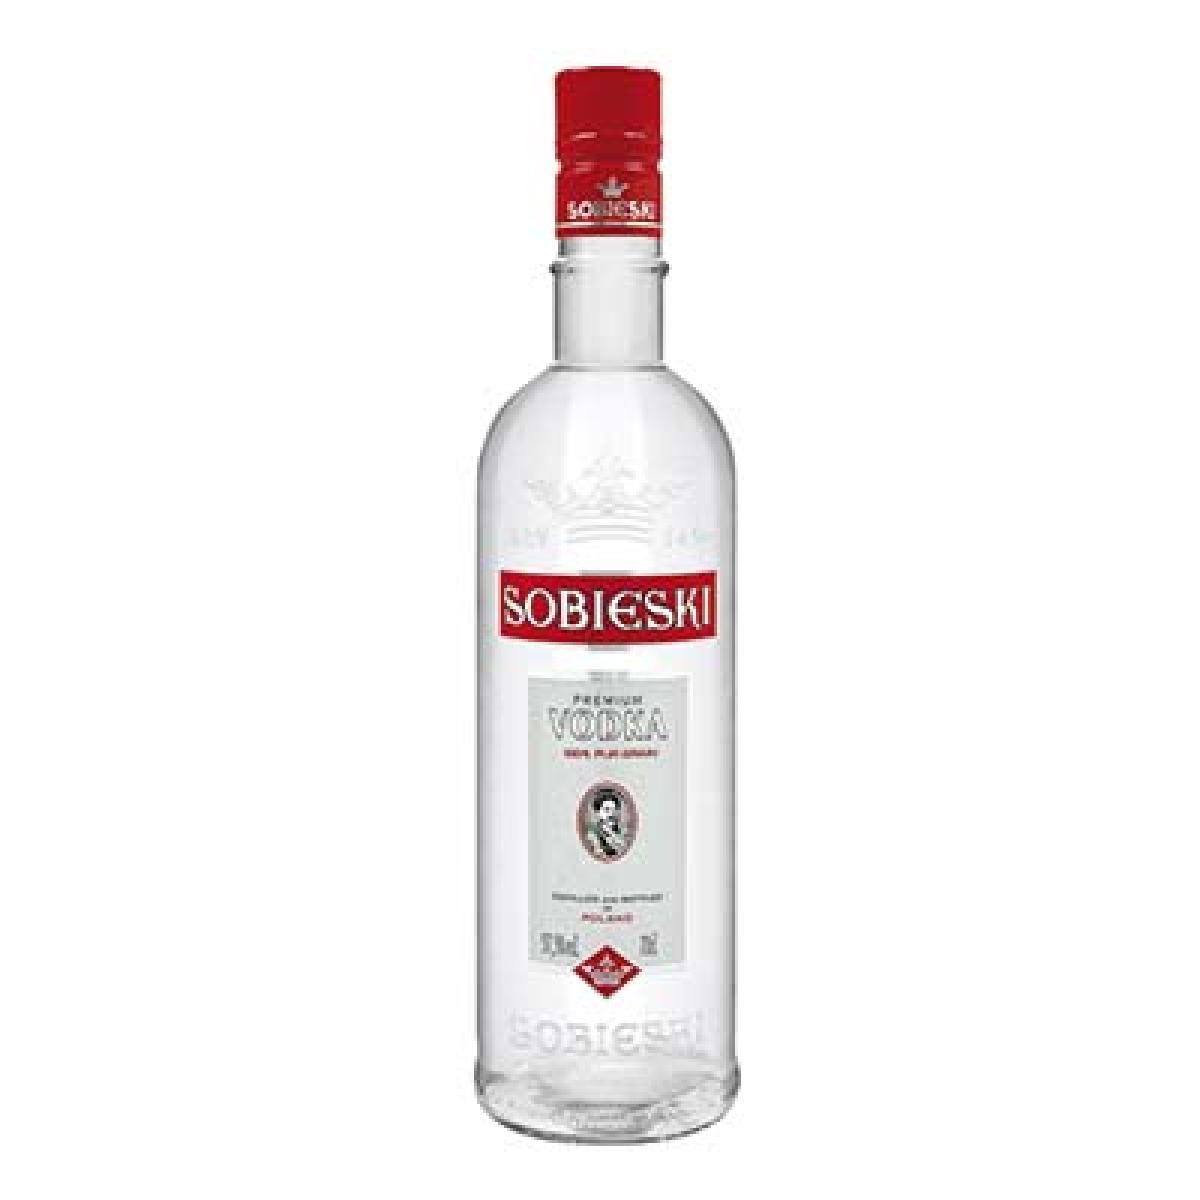 Sobieski Vodka Rebate Form